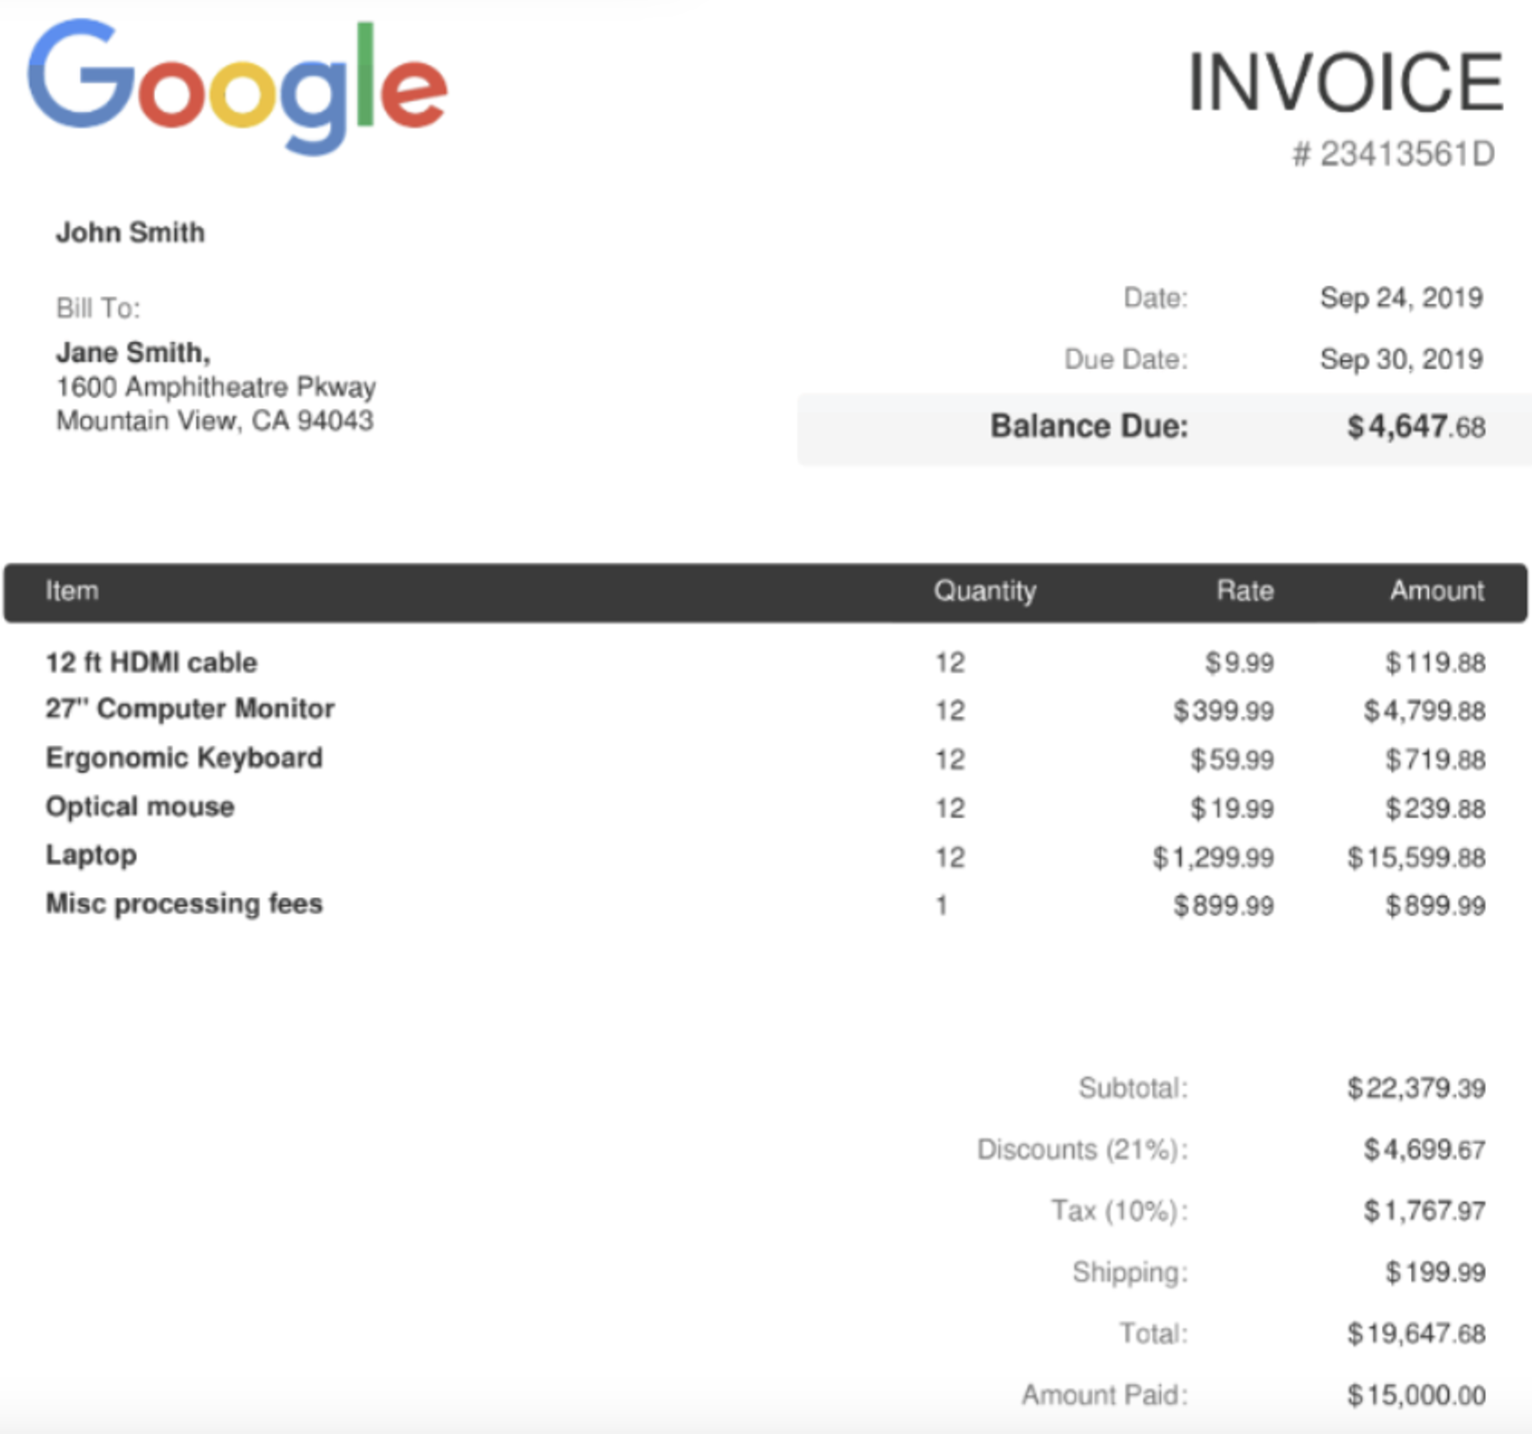 Google Invoice pdf